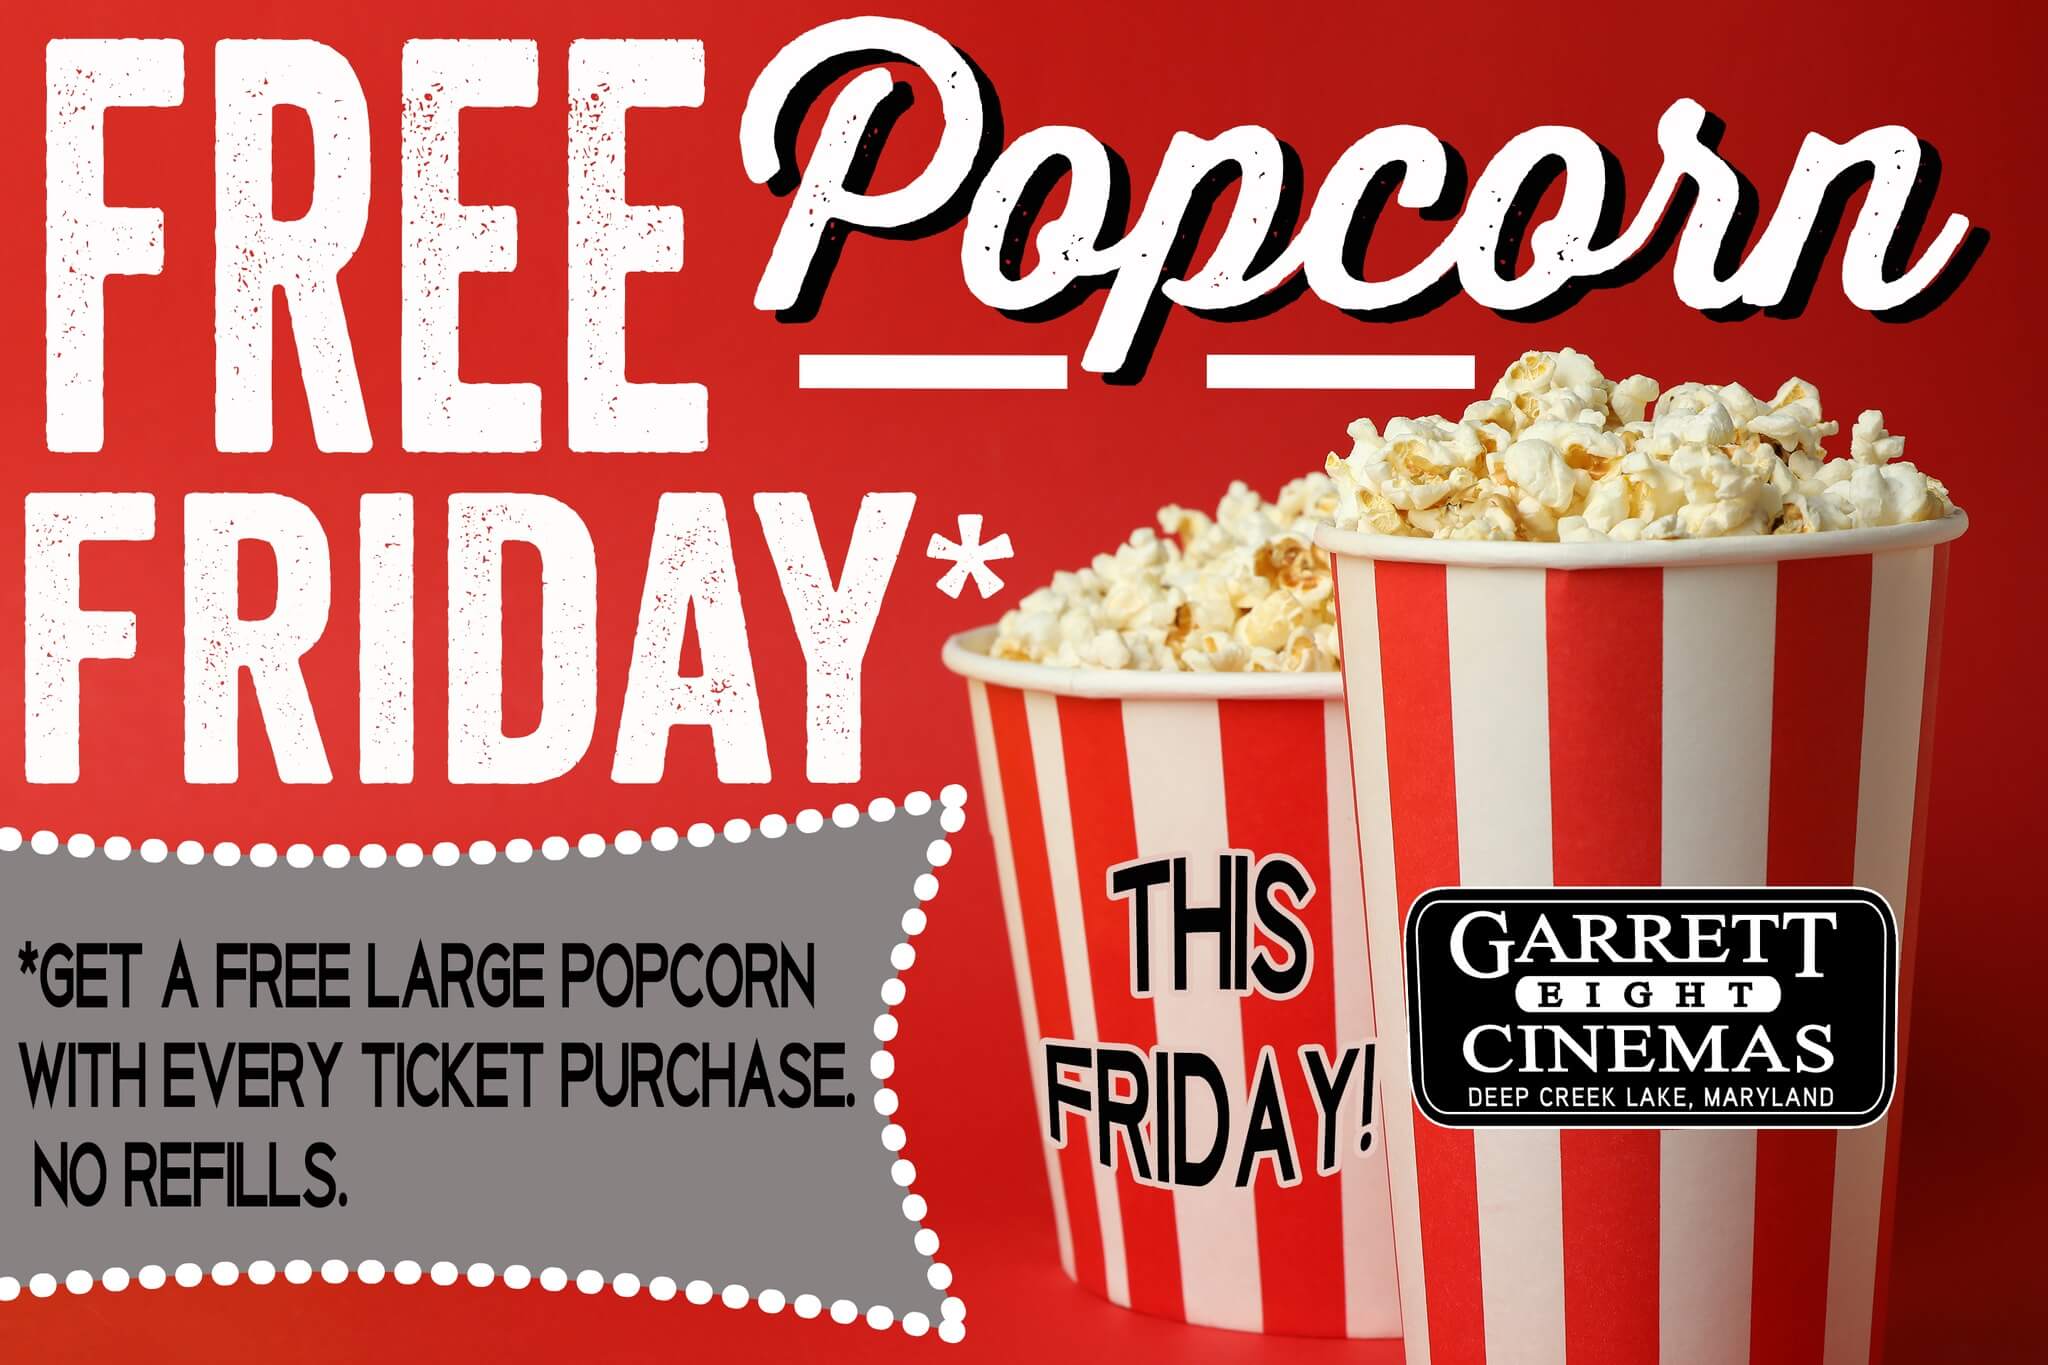 Garrett 8 Cinemas' Free Popcorn Friday at Deep Creek Lake, MD